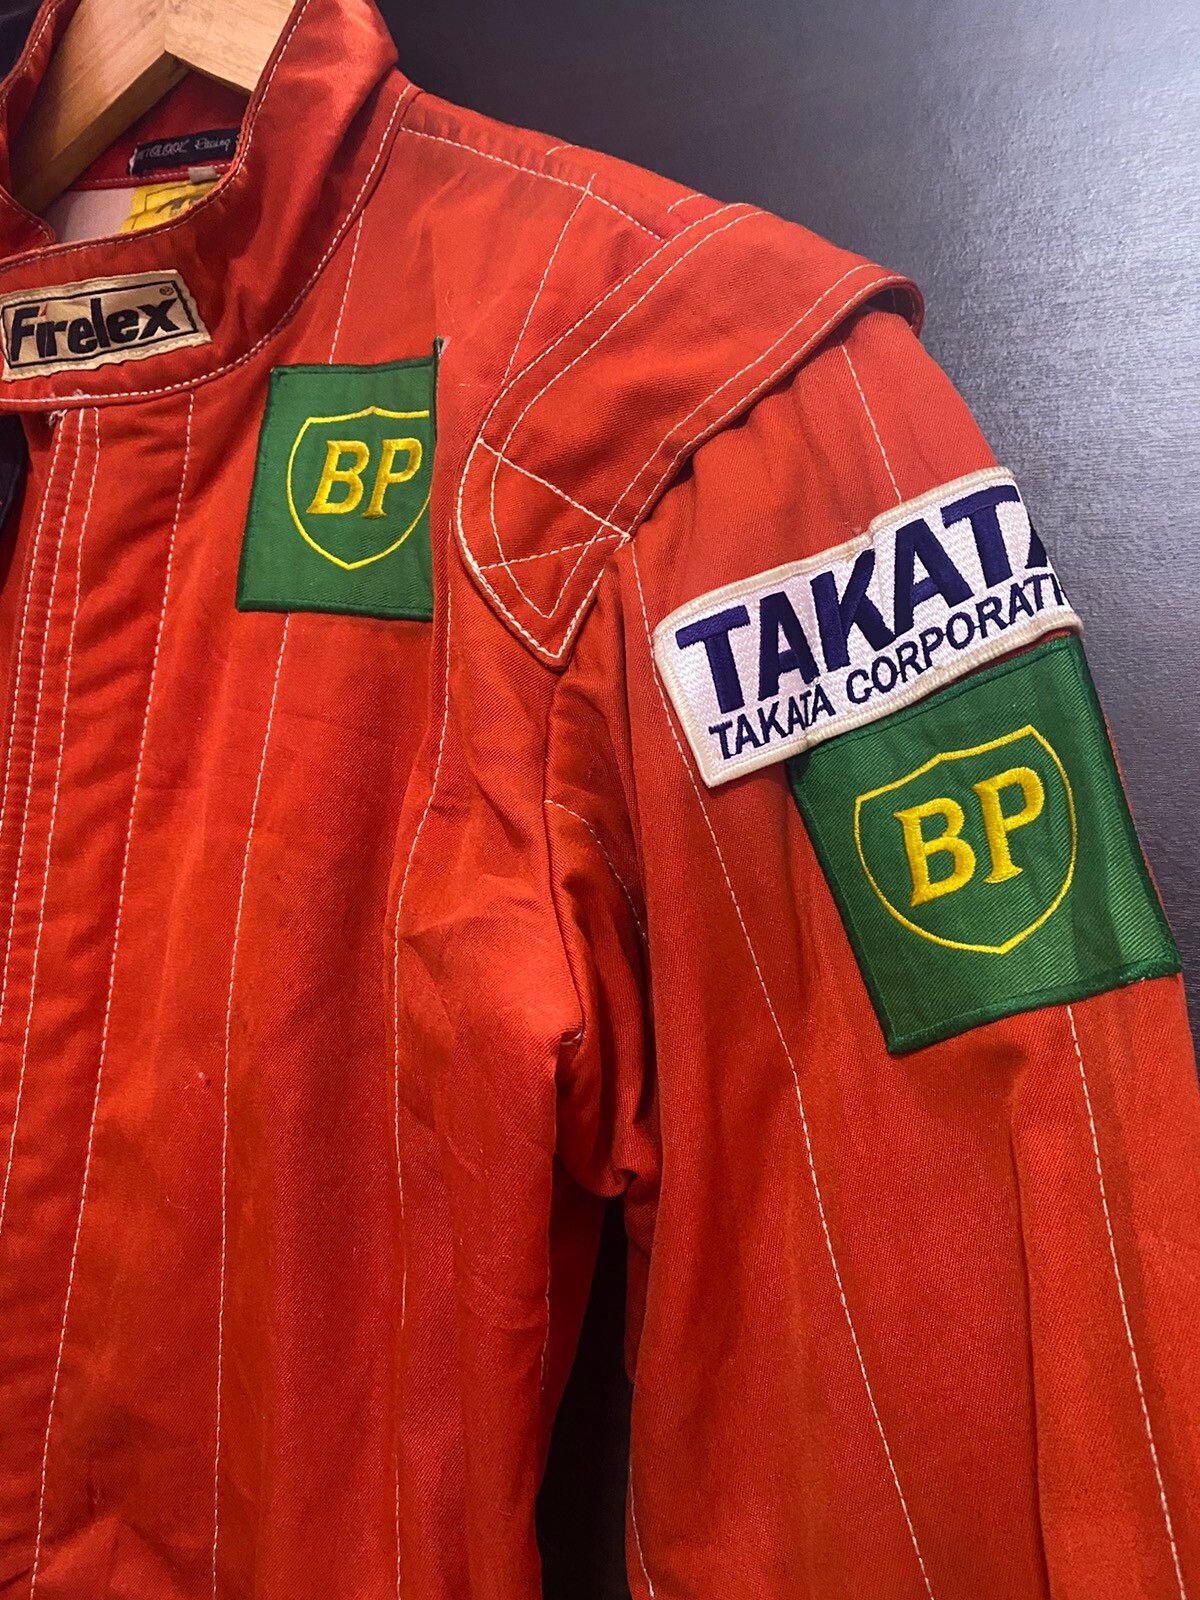 Sports Specialties - Vintage BP Firelex Takata Racing Jumpsuit Overalls - 6